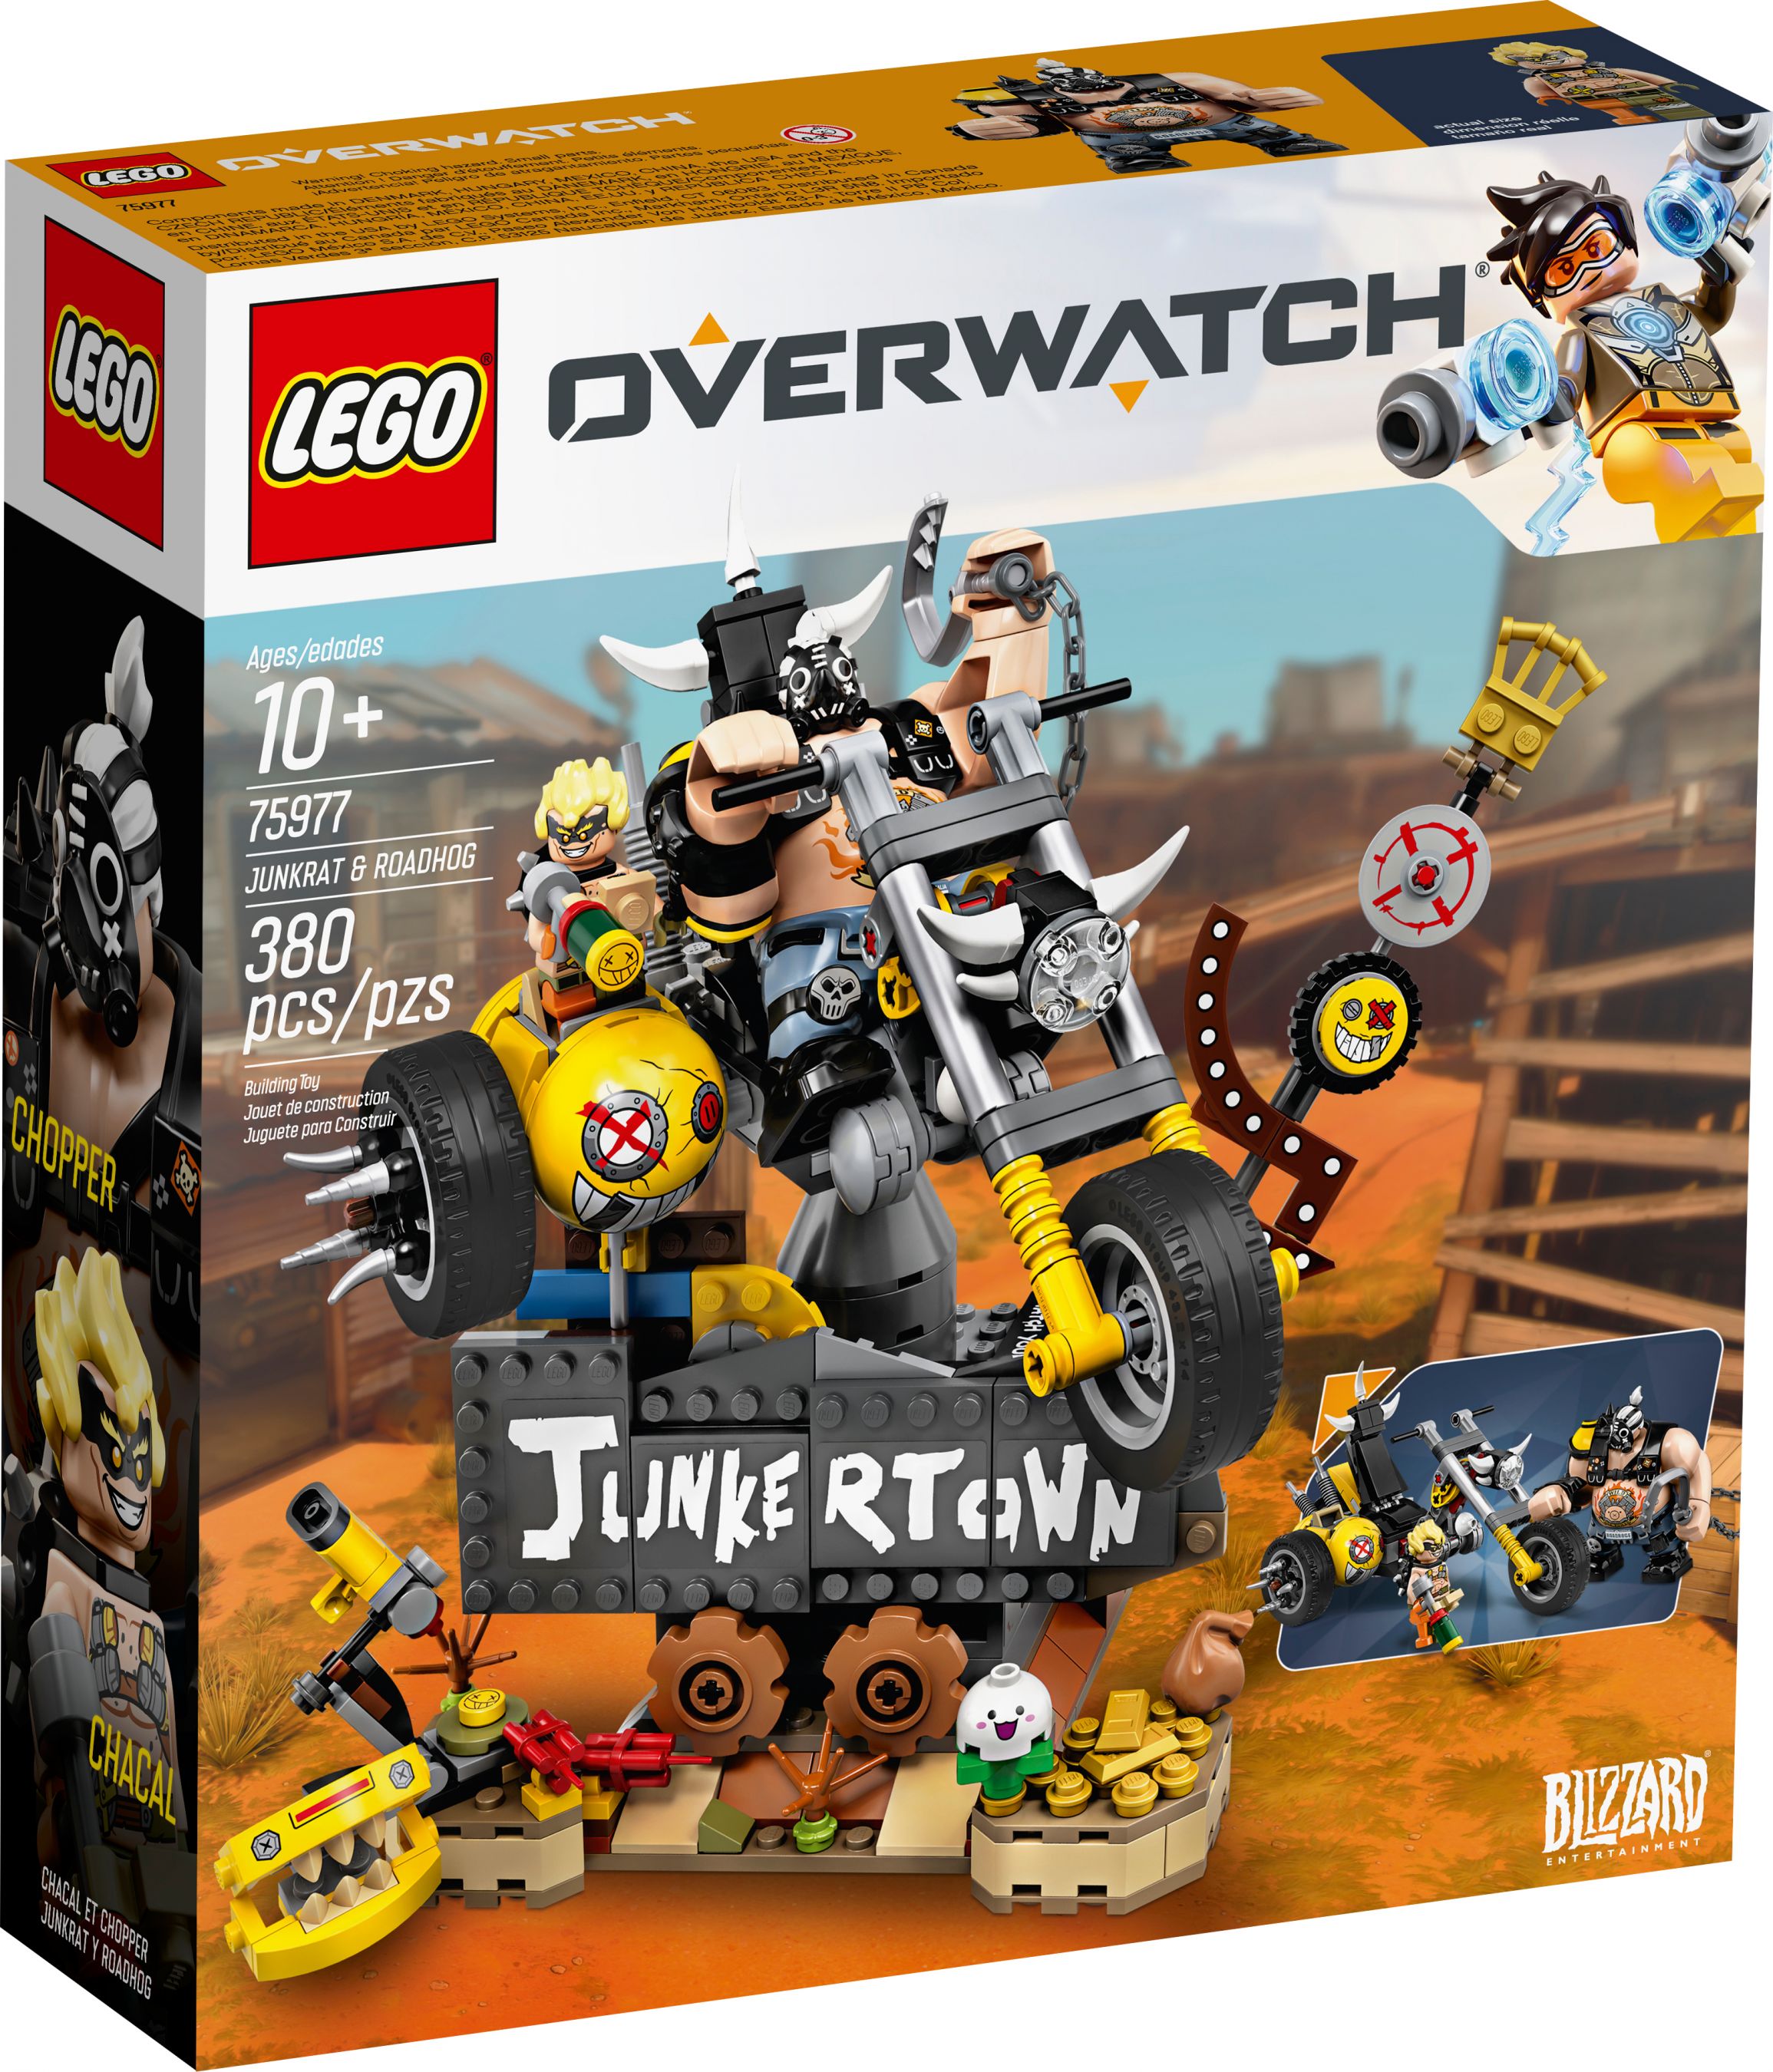 LEGO Overwatch 75977 Junkertown Bike LEGO_75977_alt1.jpg